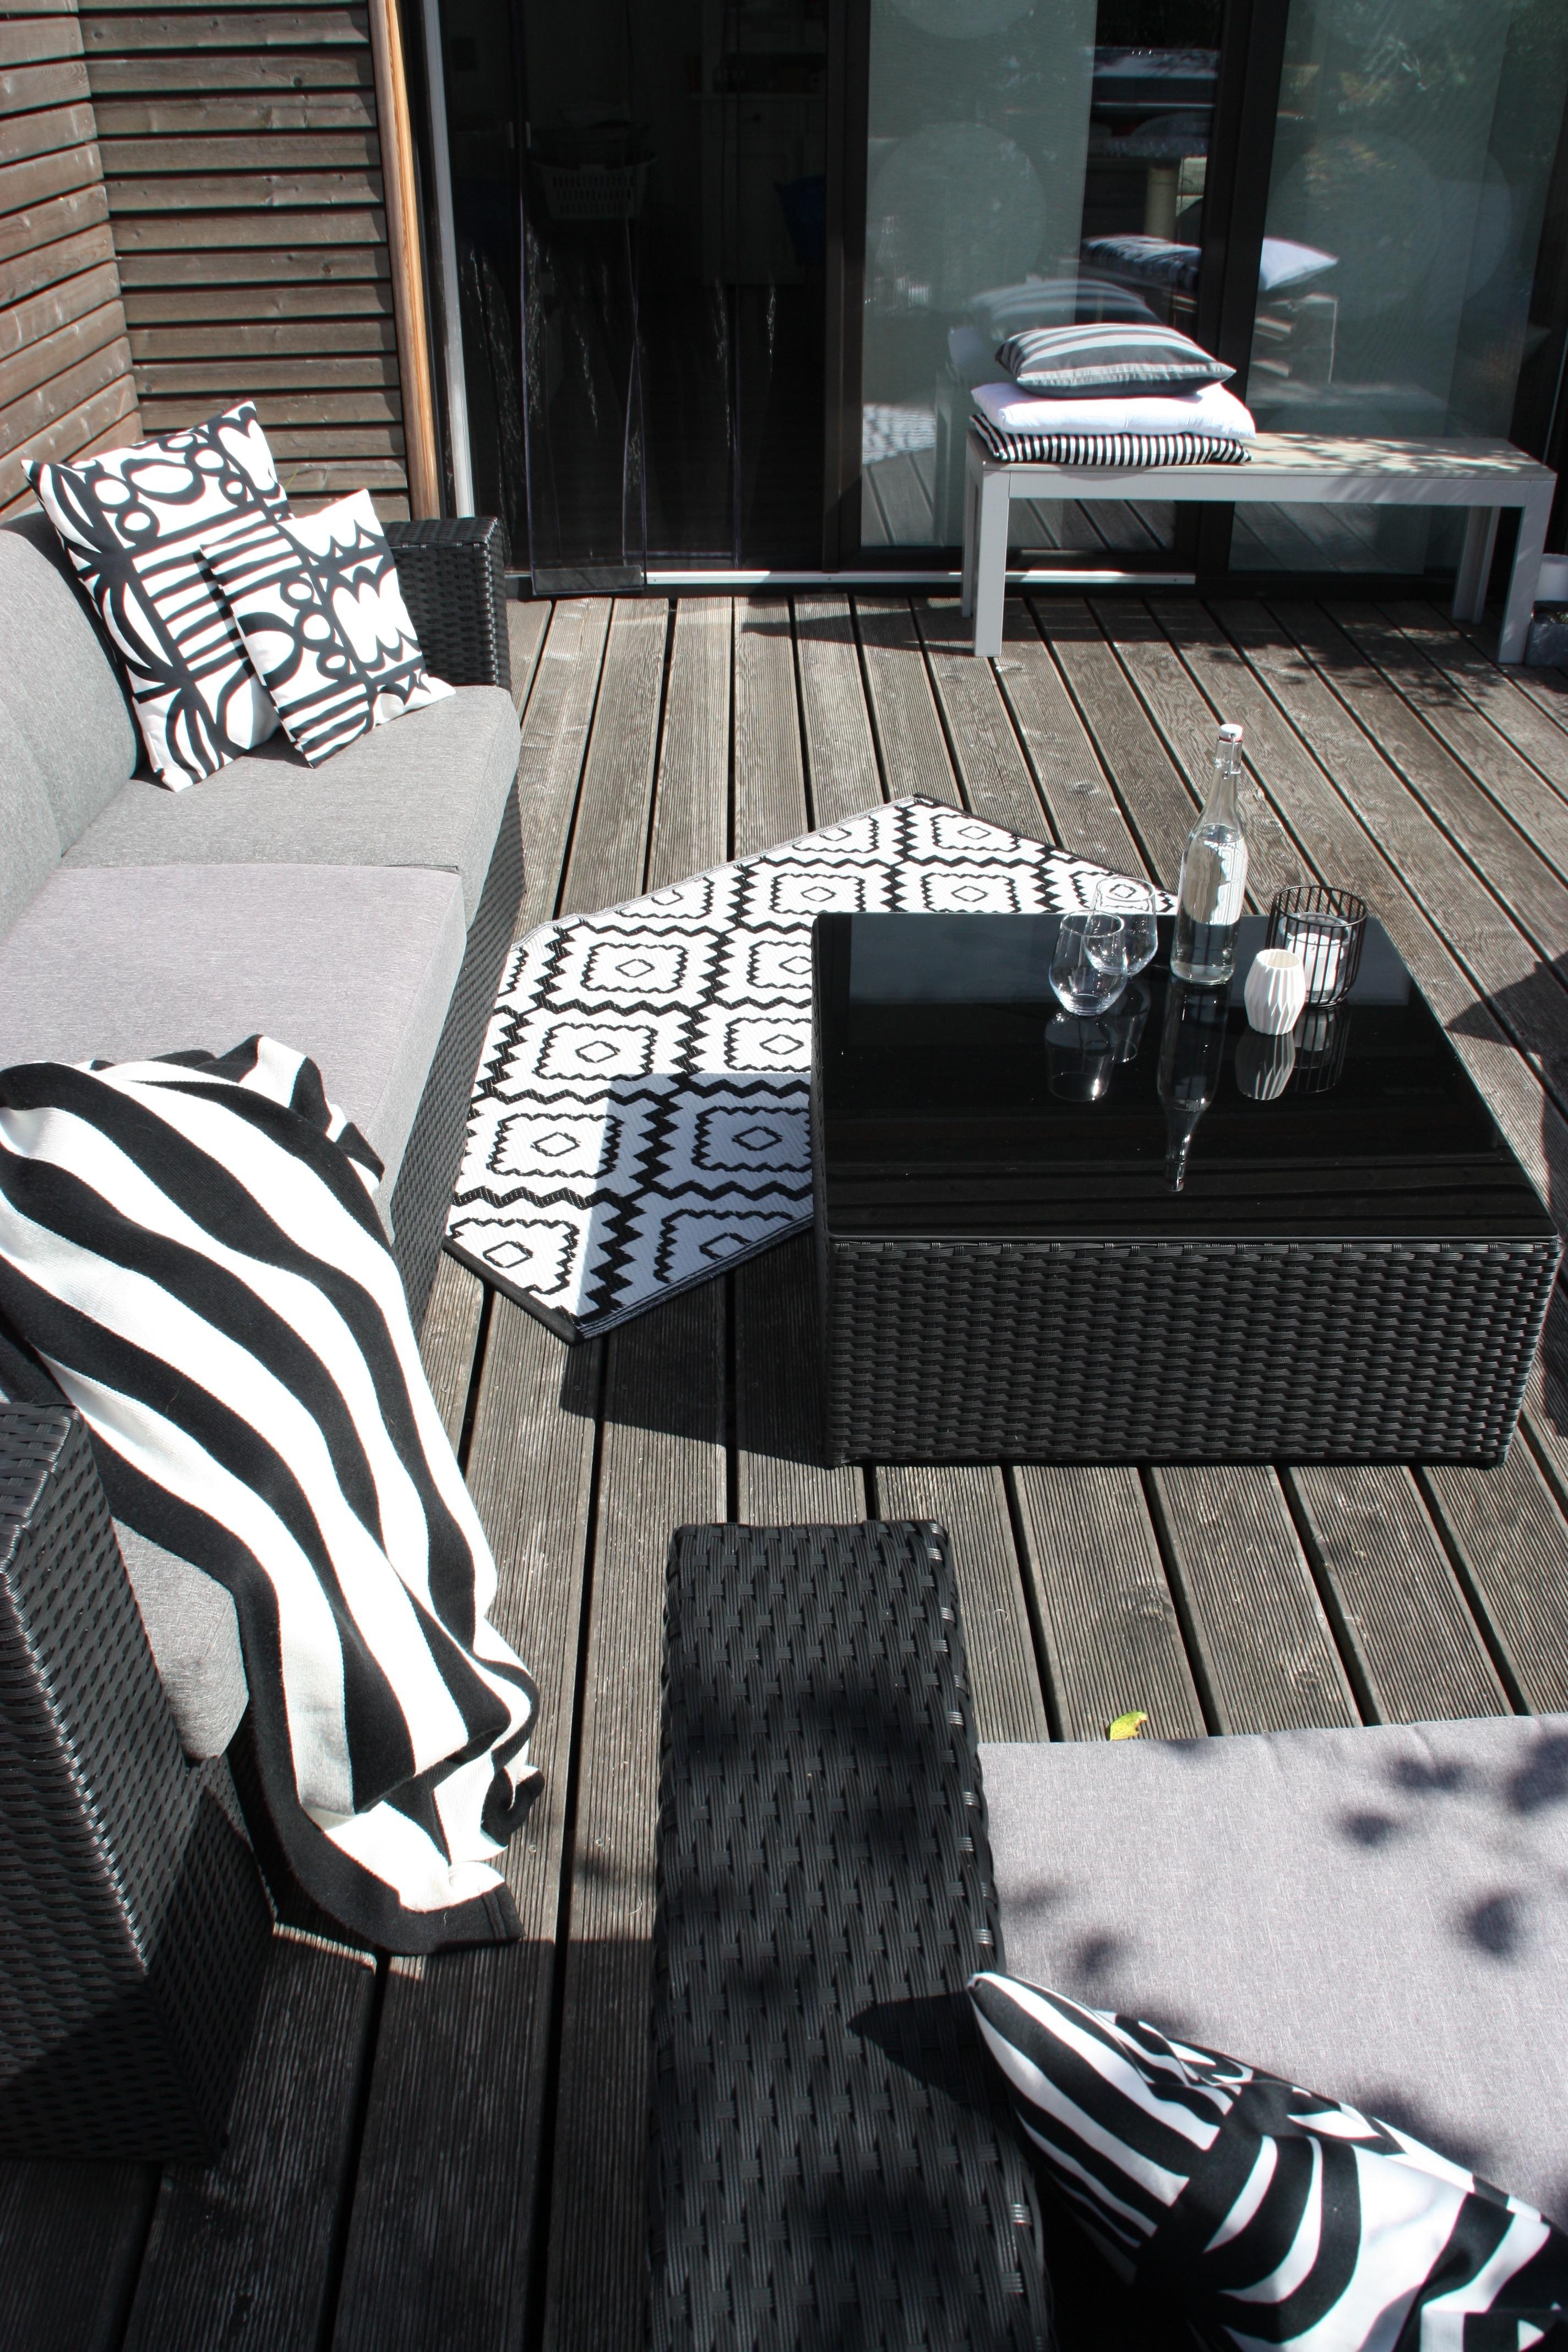 OutDOOR

#terrasse #outdoor #hyggelig #blackandwhite #living #greycrownhome #gemütlich